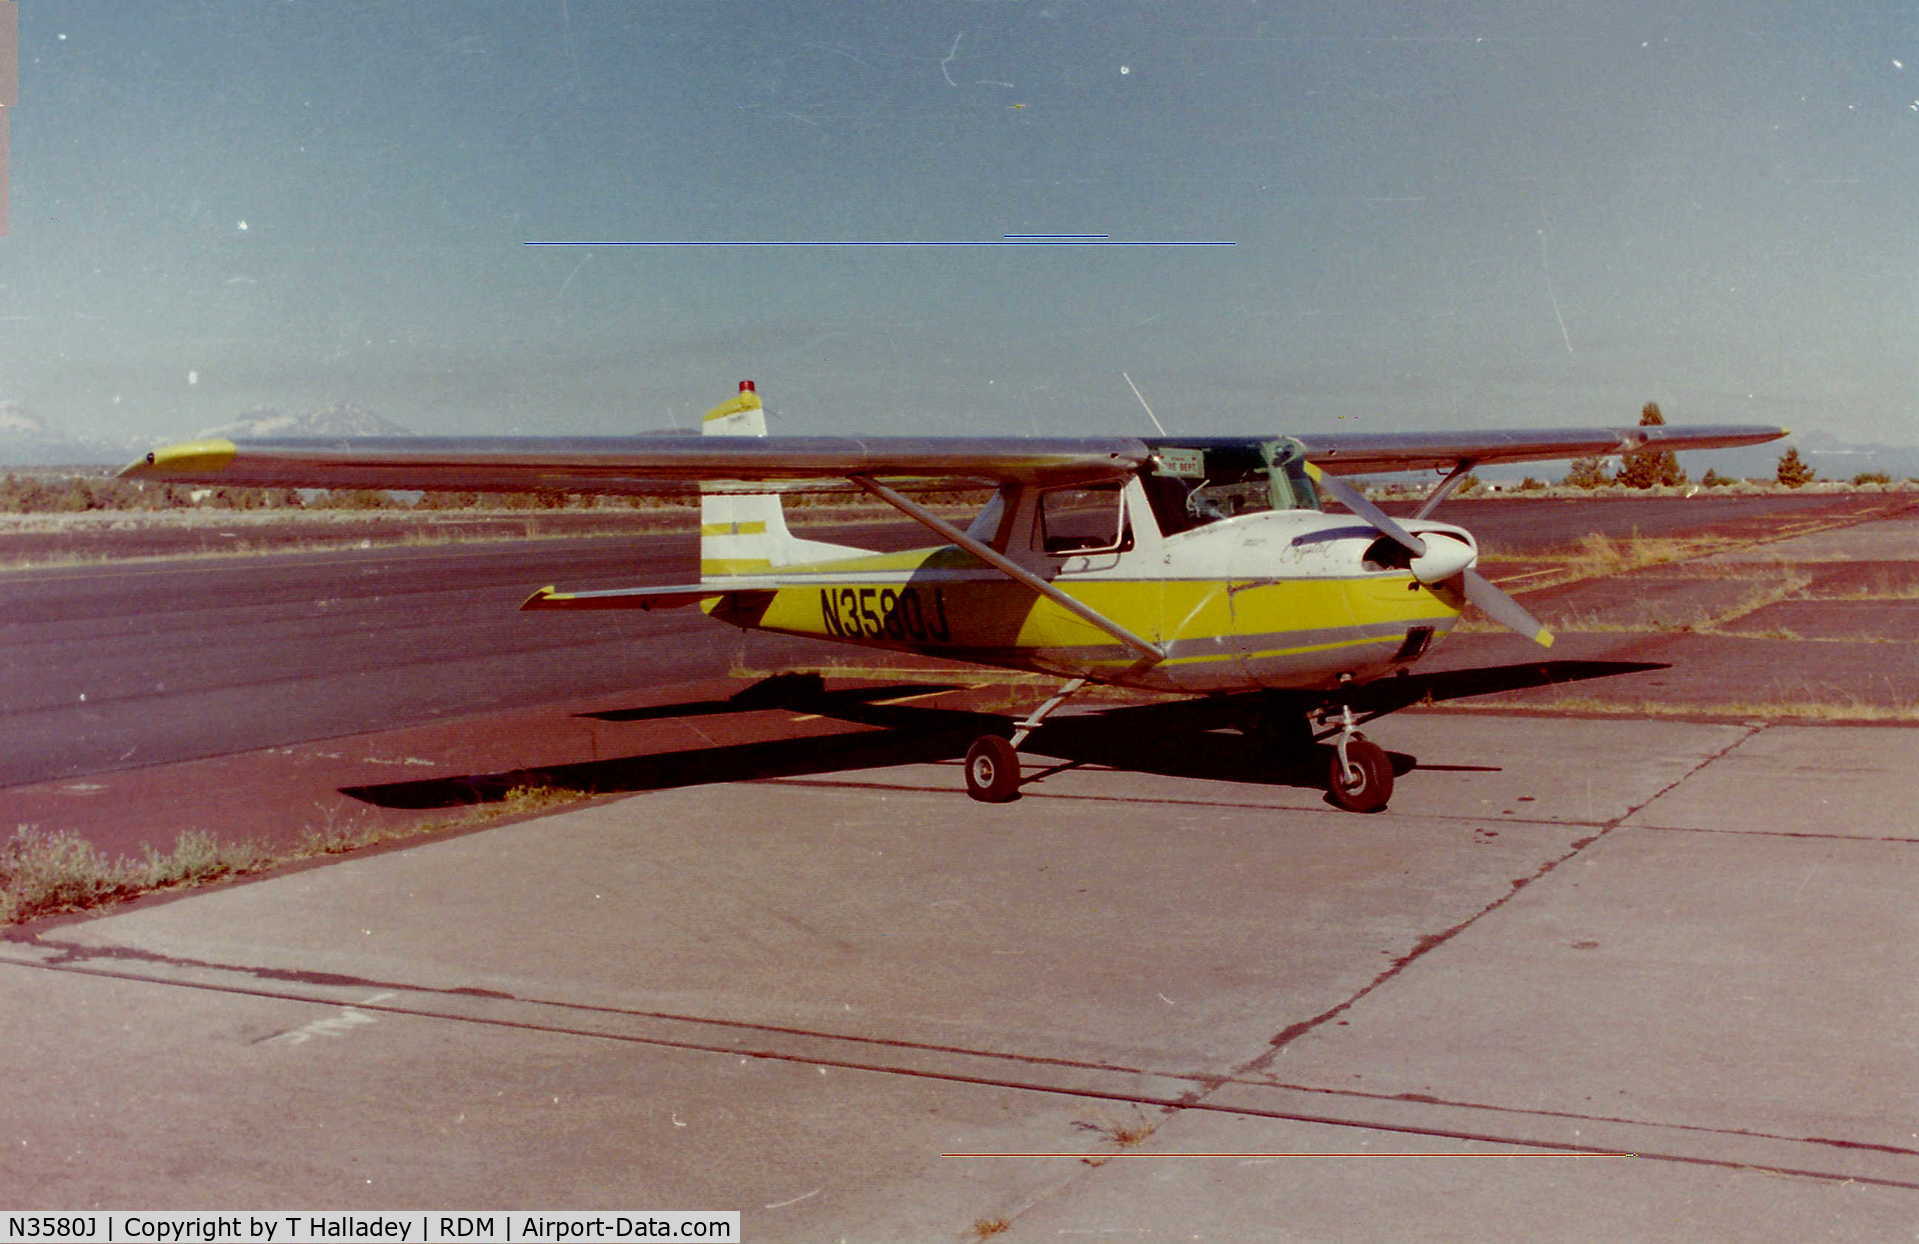 N3580J, 1965 Cessna 150E C/N 15061280, N3580J at Redmond Oregon about 1985